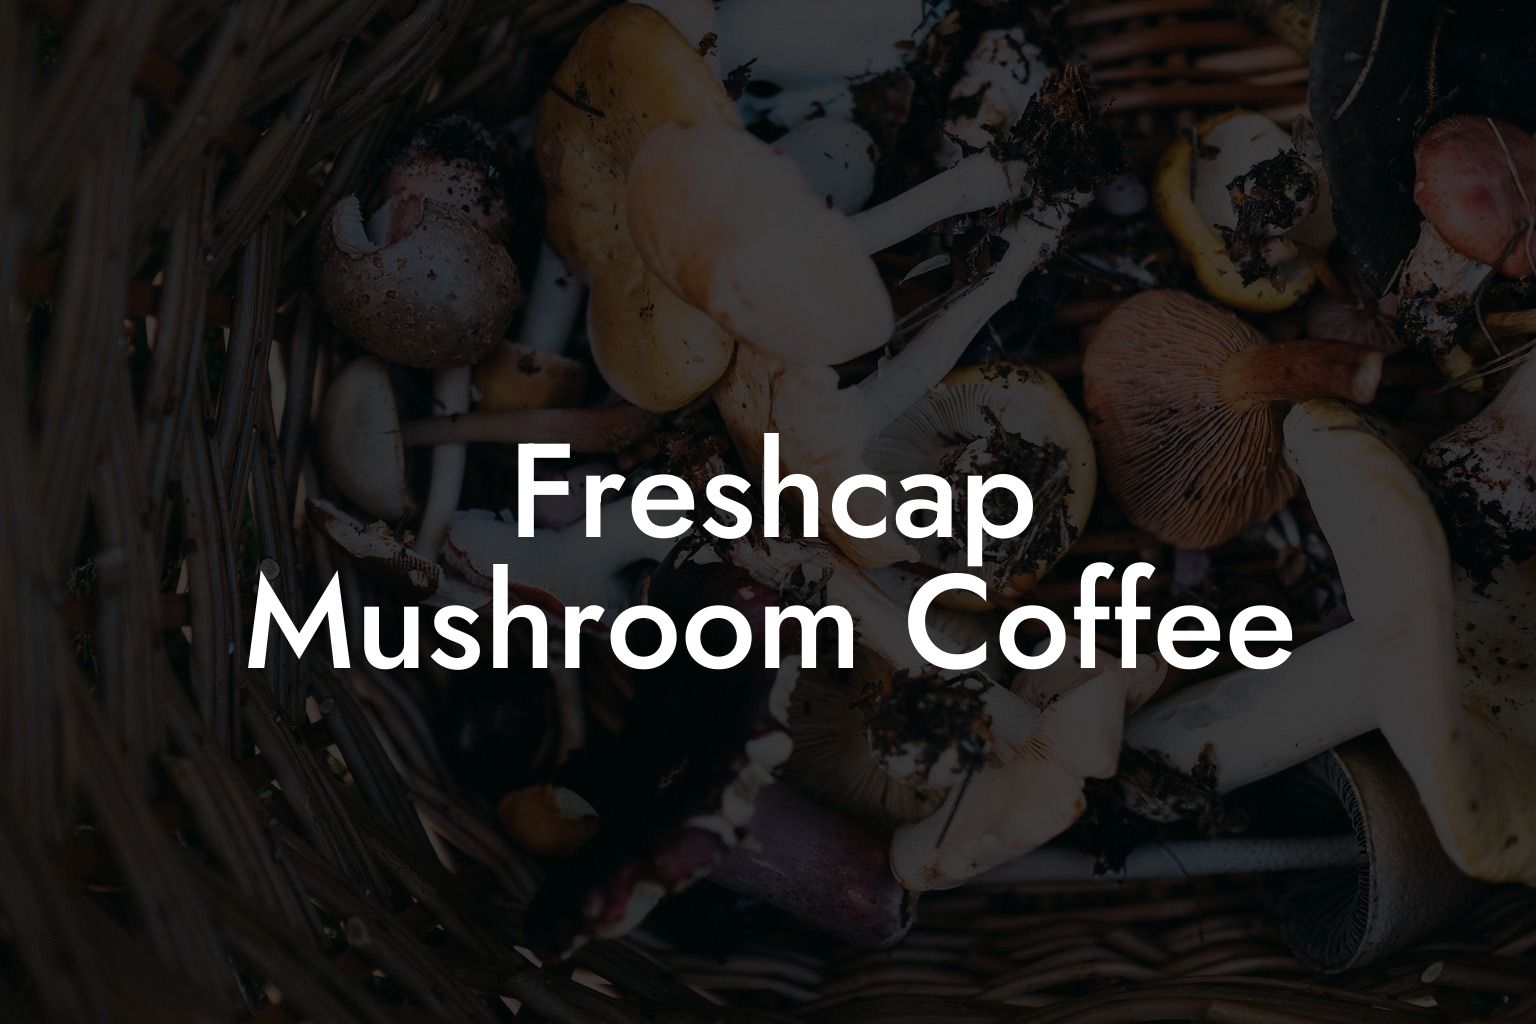 Freshcap Mushroom Coffee